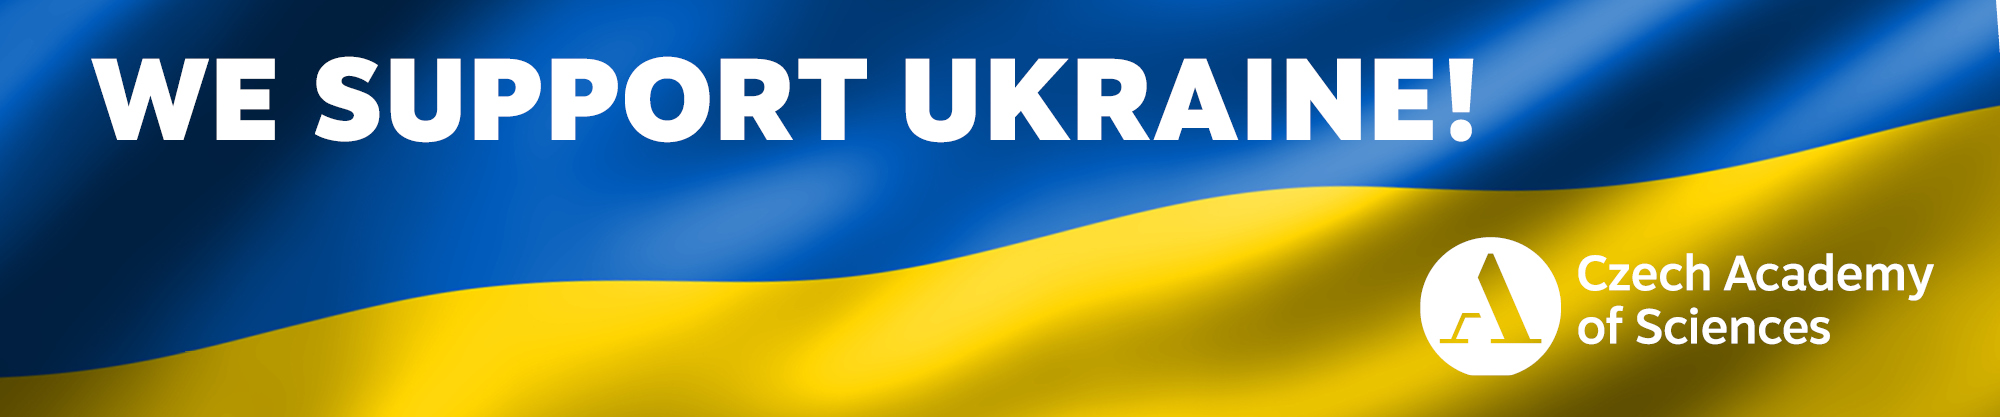 We support Ukraine.